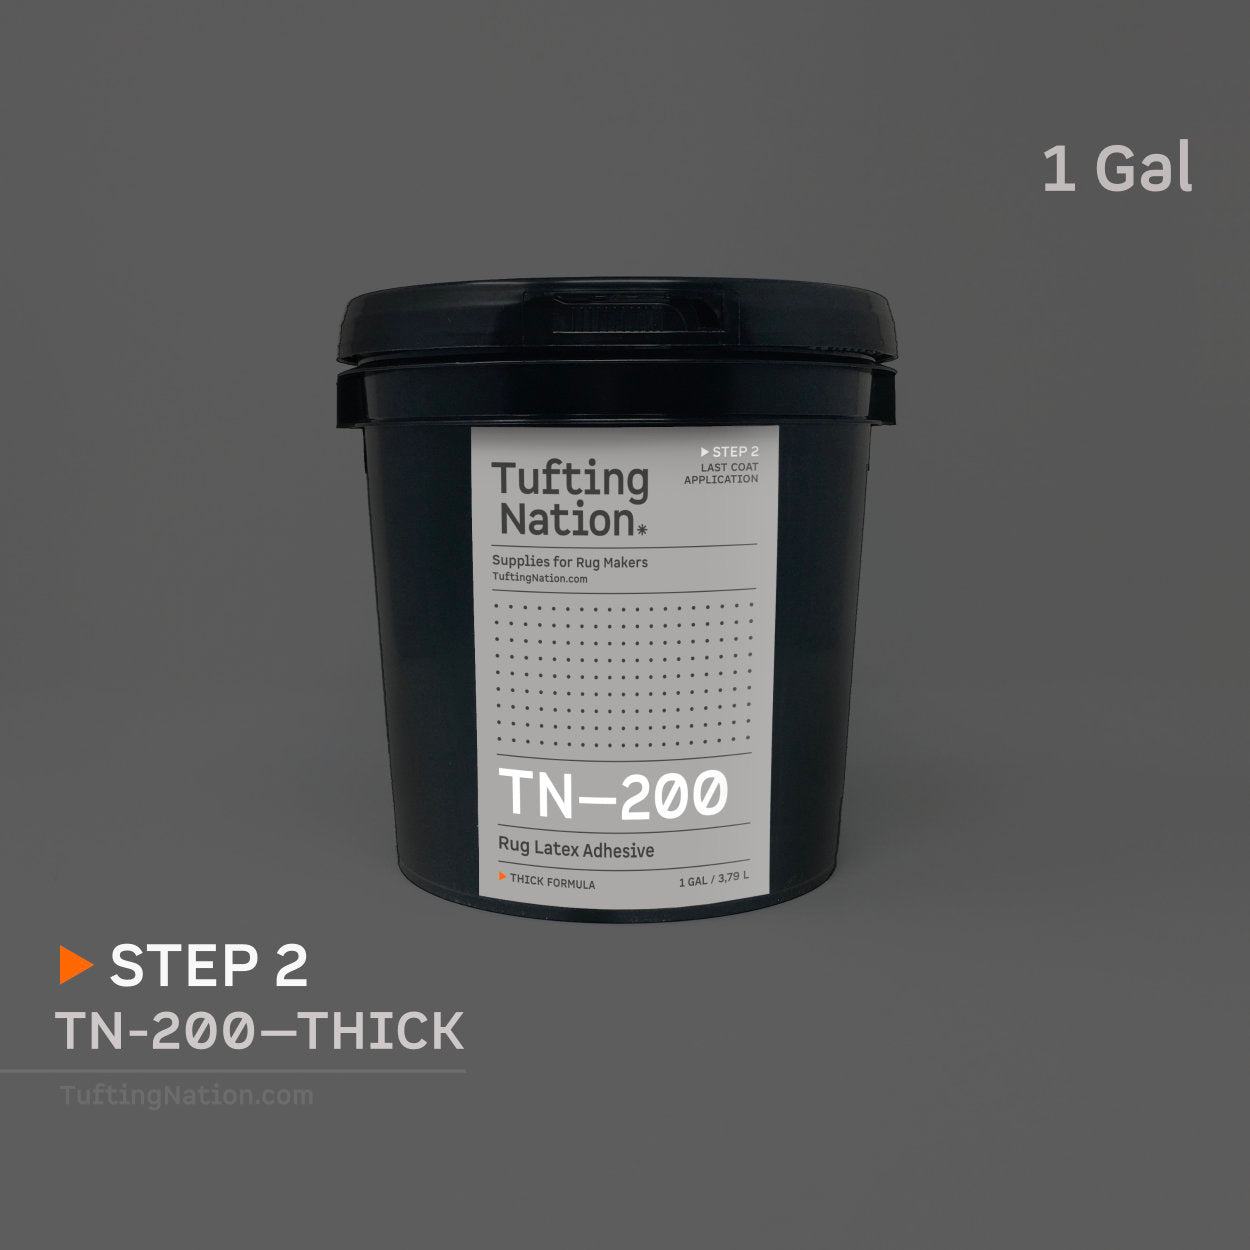 1 gallon of Rug Latex Adhesive for Rug Tufting | TuftingNation